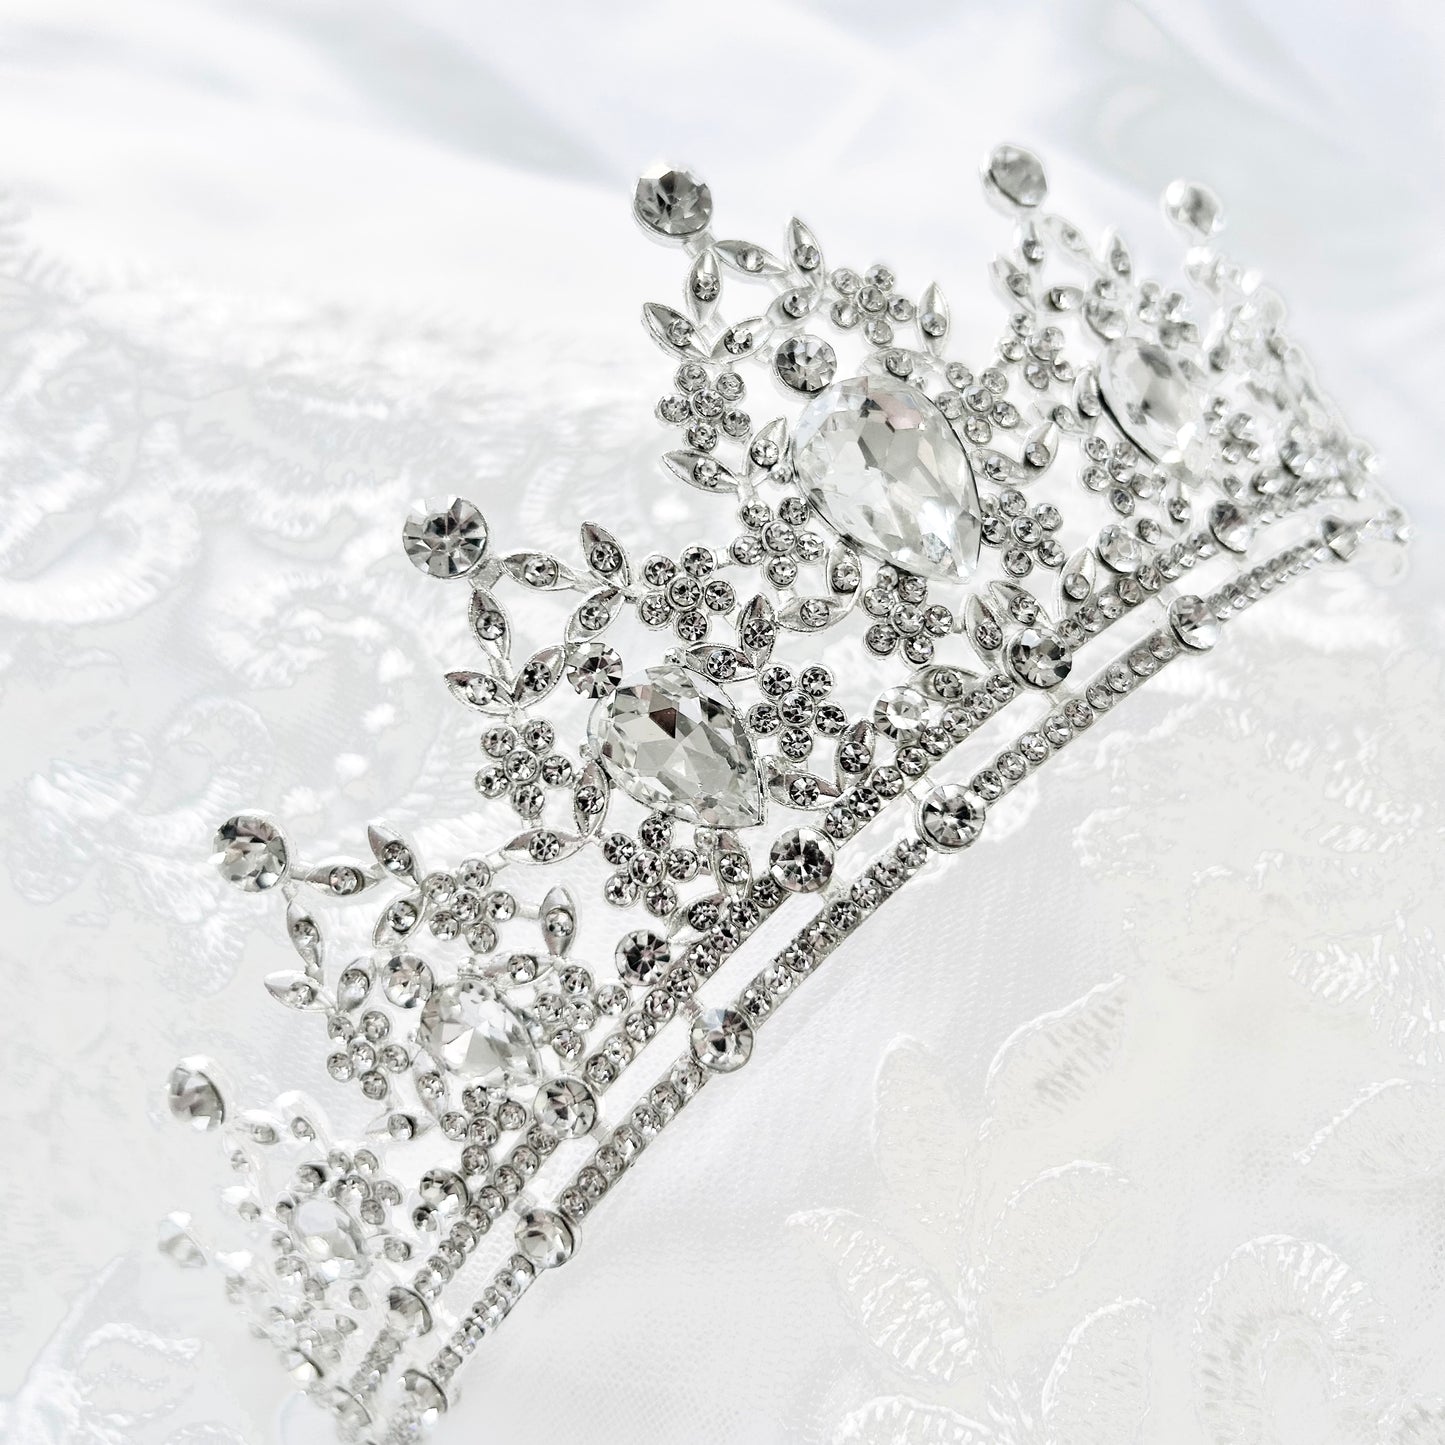 kensington-wedding-tiara